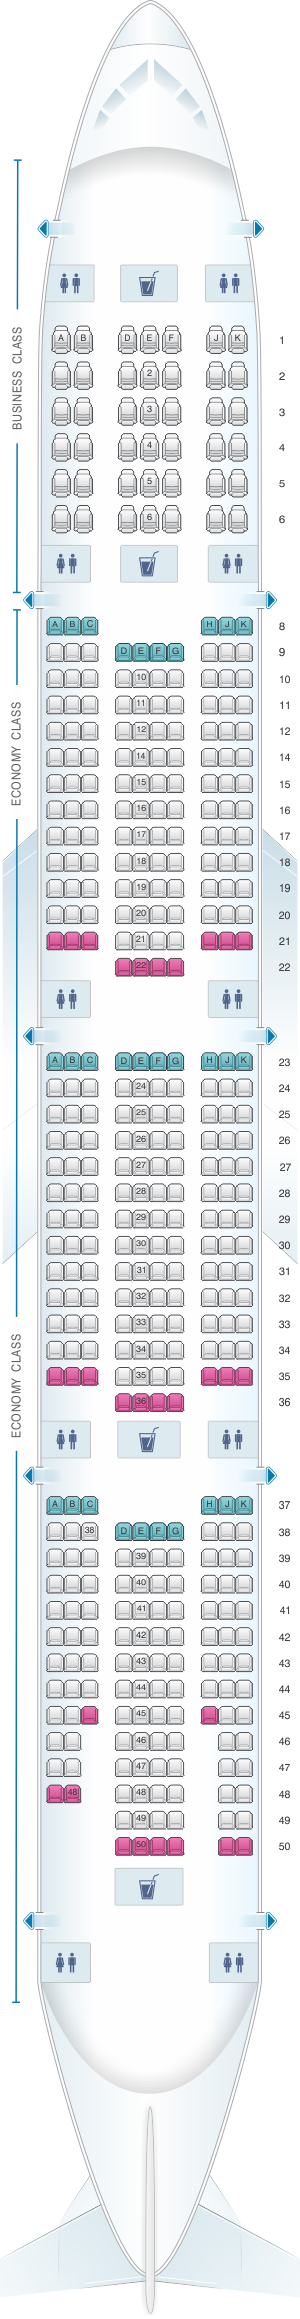 Emirates 777 Seating Chart